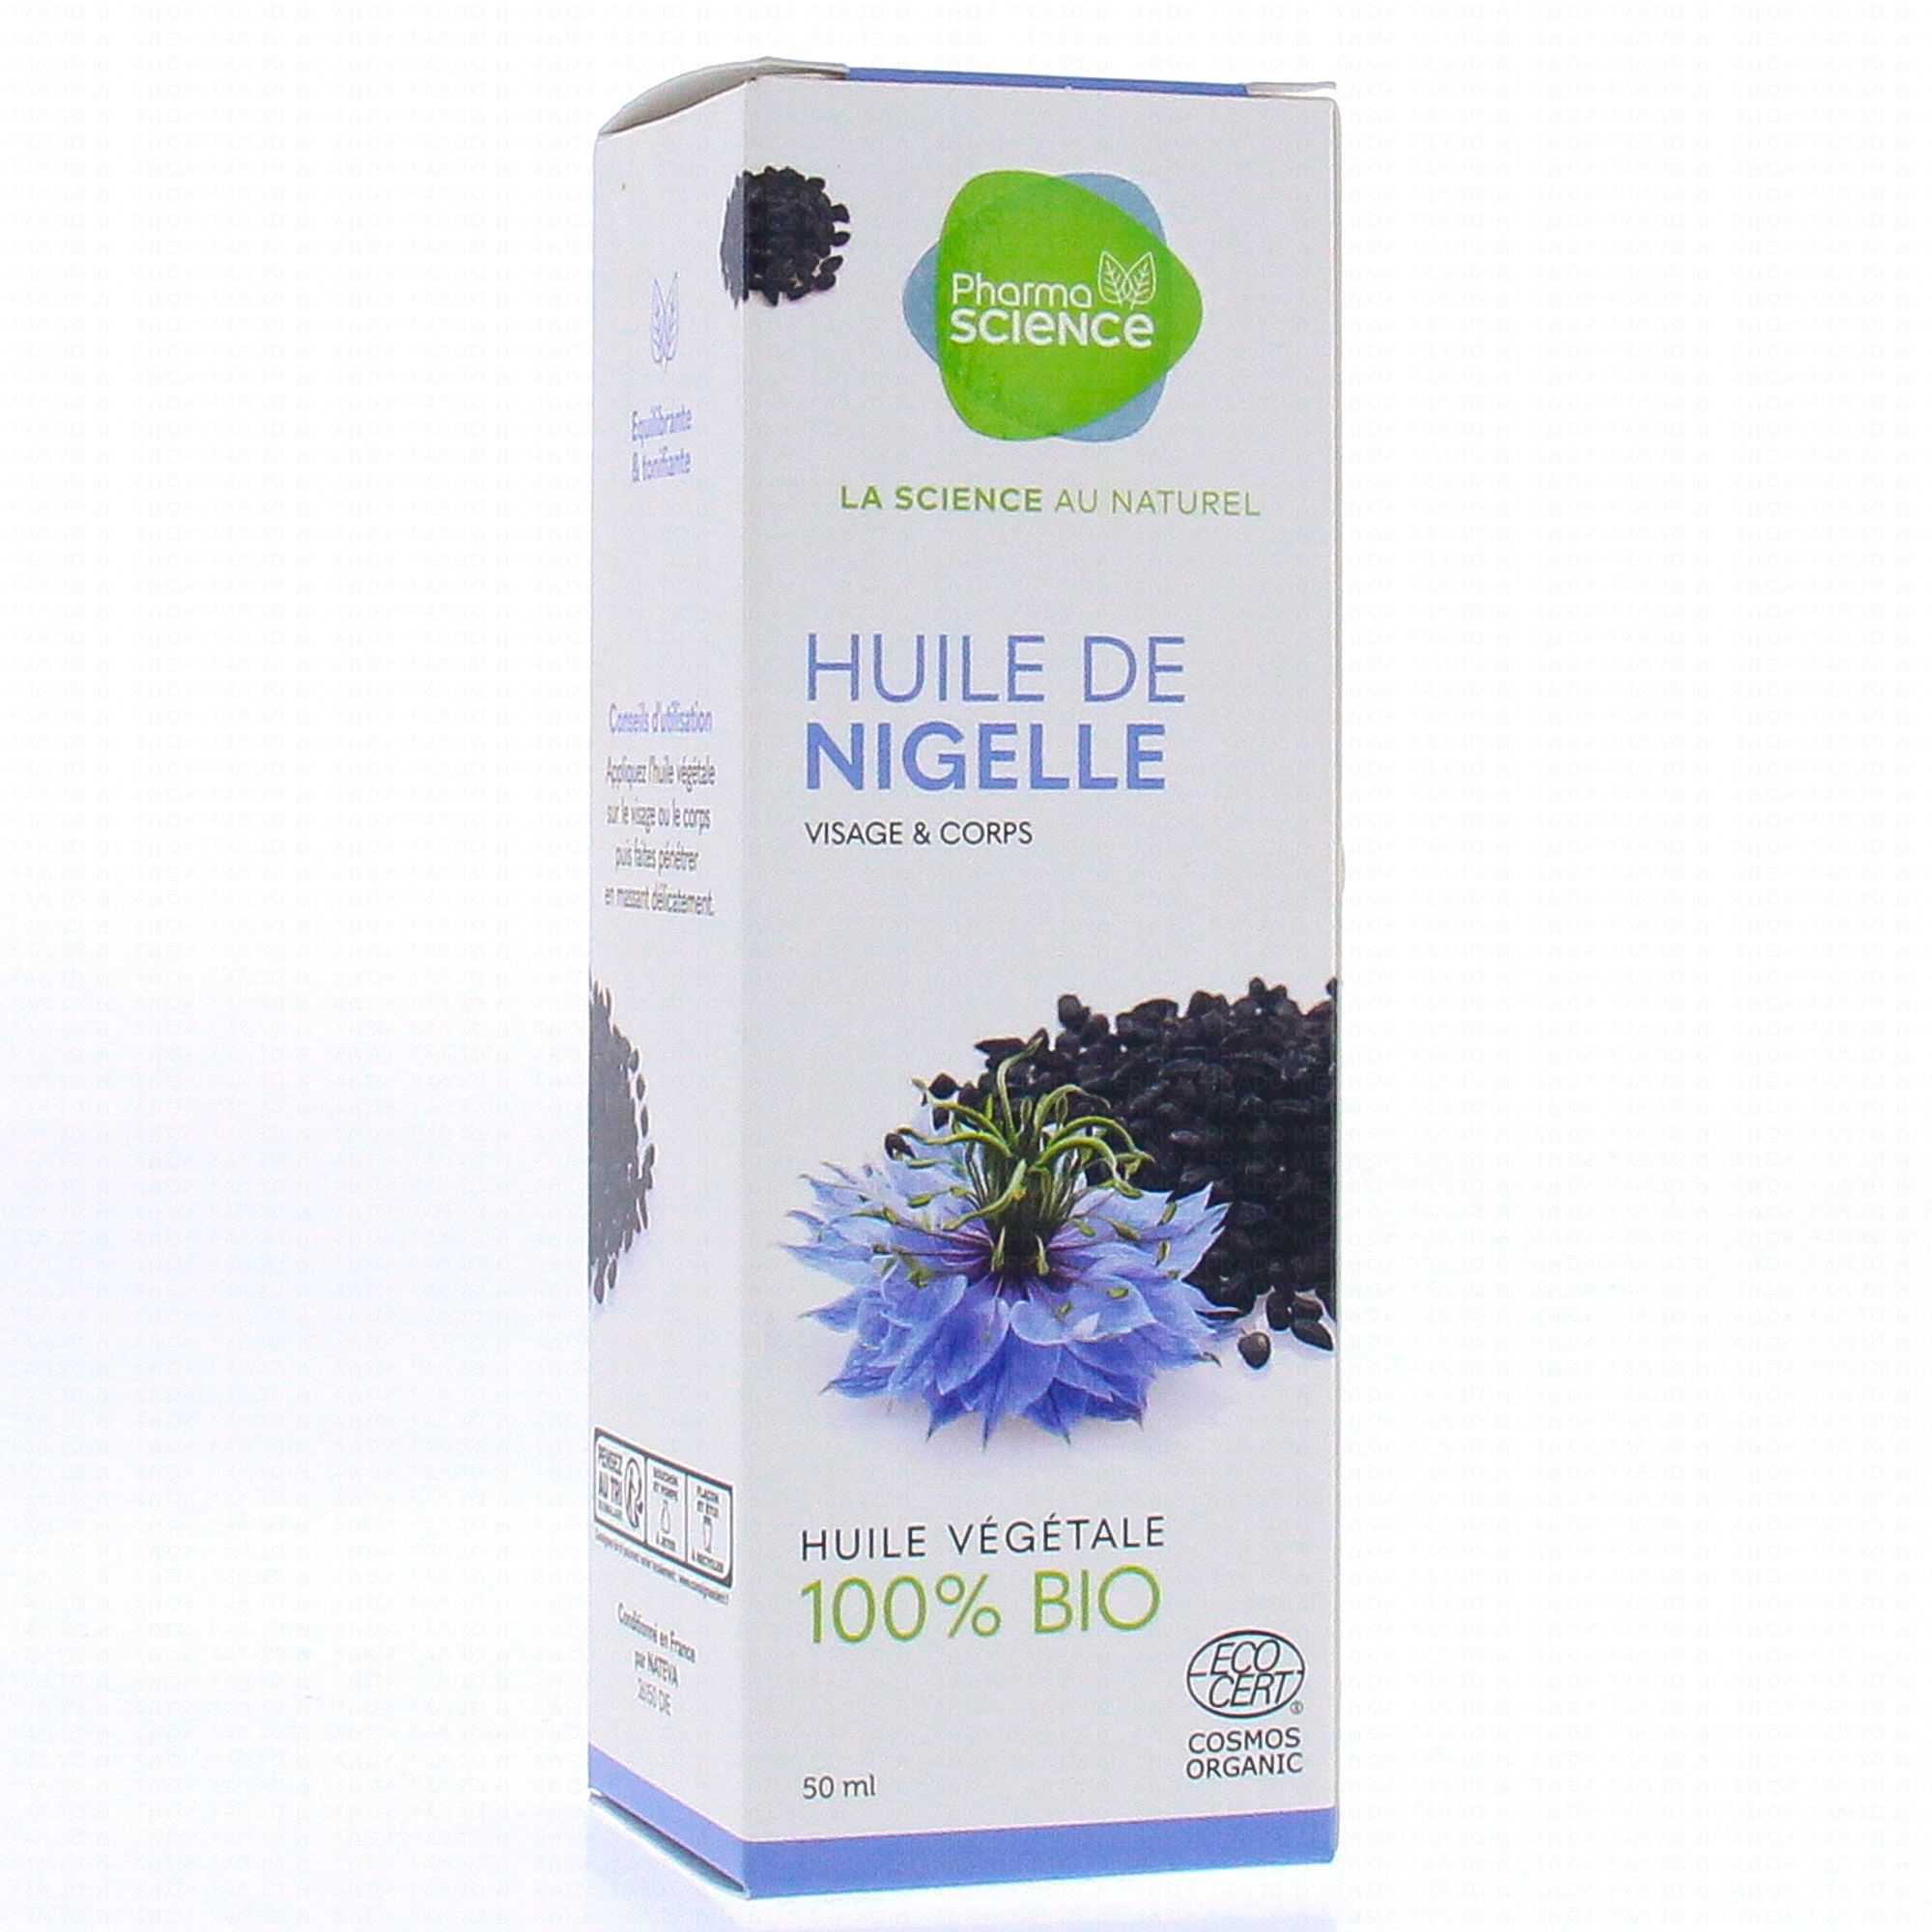 Nigelle Bio Plant.olie 50ml Pranarom  Lloydspharma Apotheek – LloydsPharma